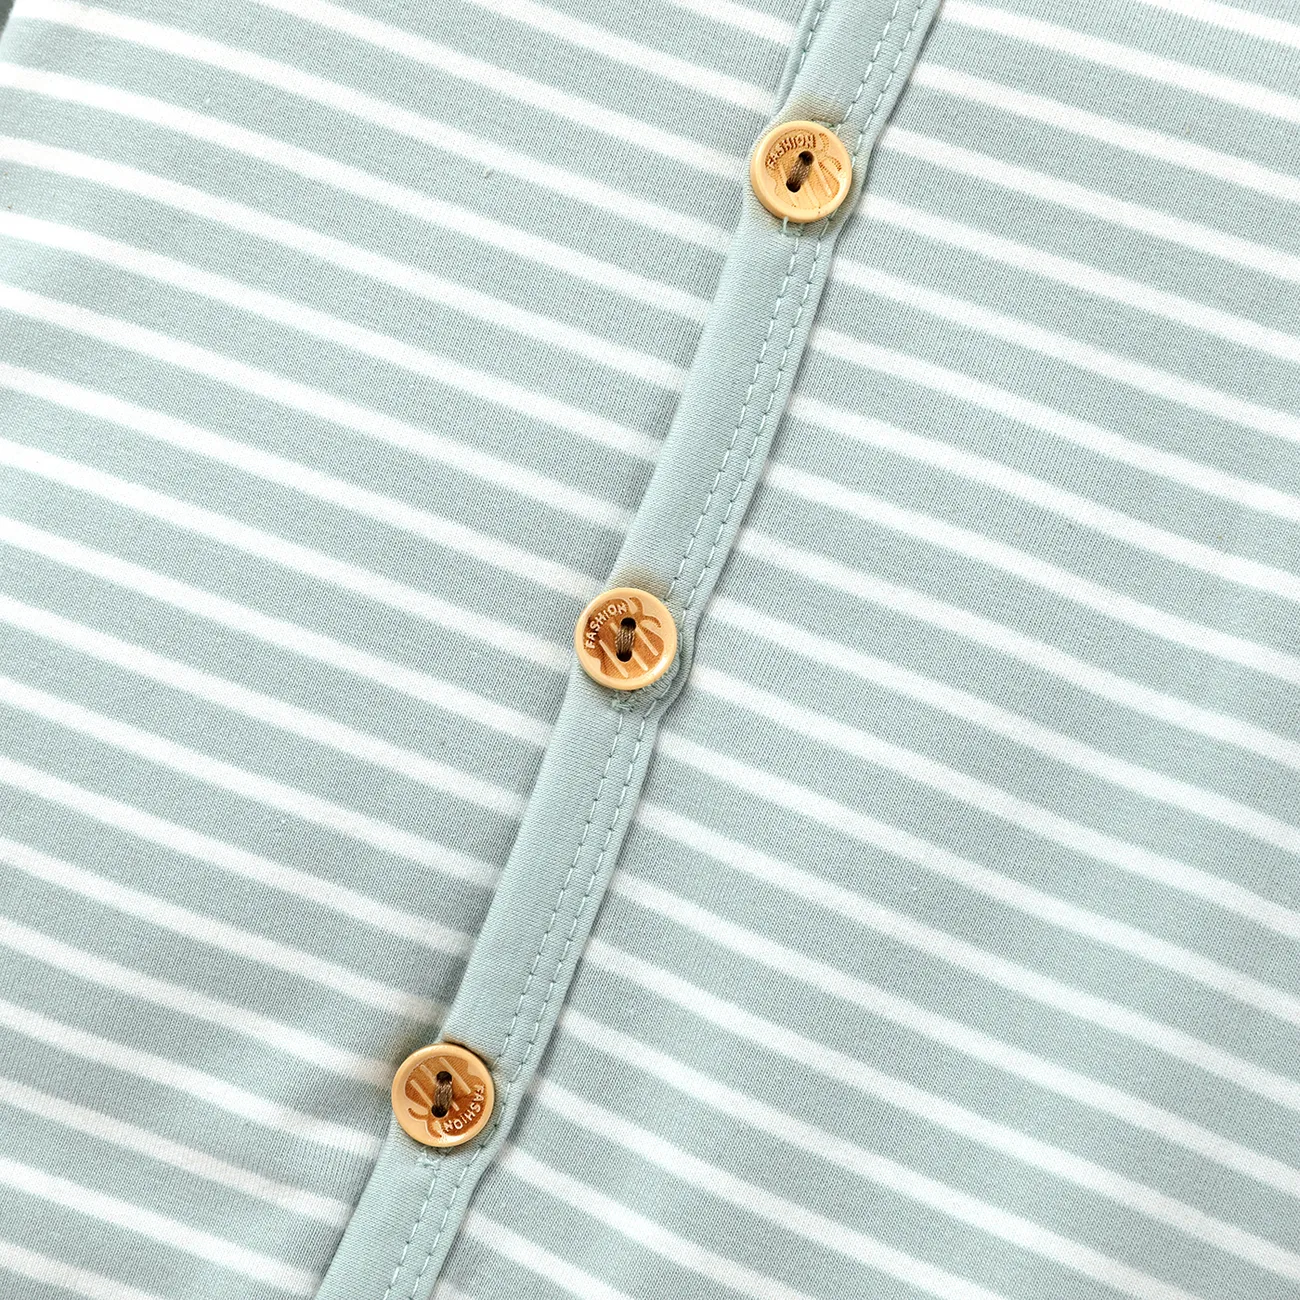 Stripe Print Short-sleeve Baby Jumpsuit Light Blue big image 1